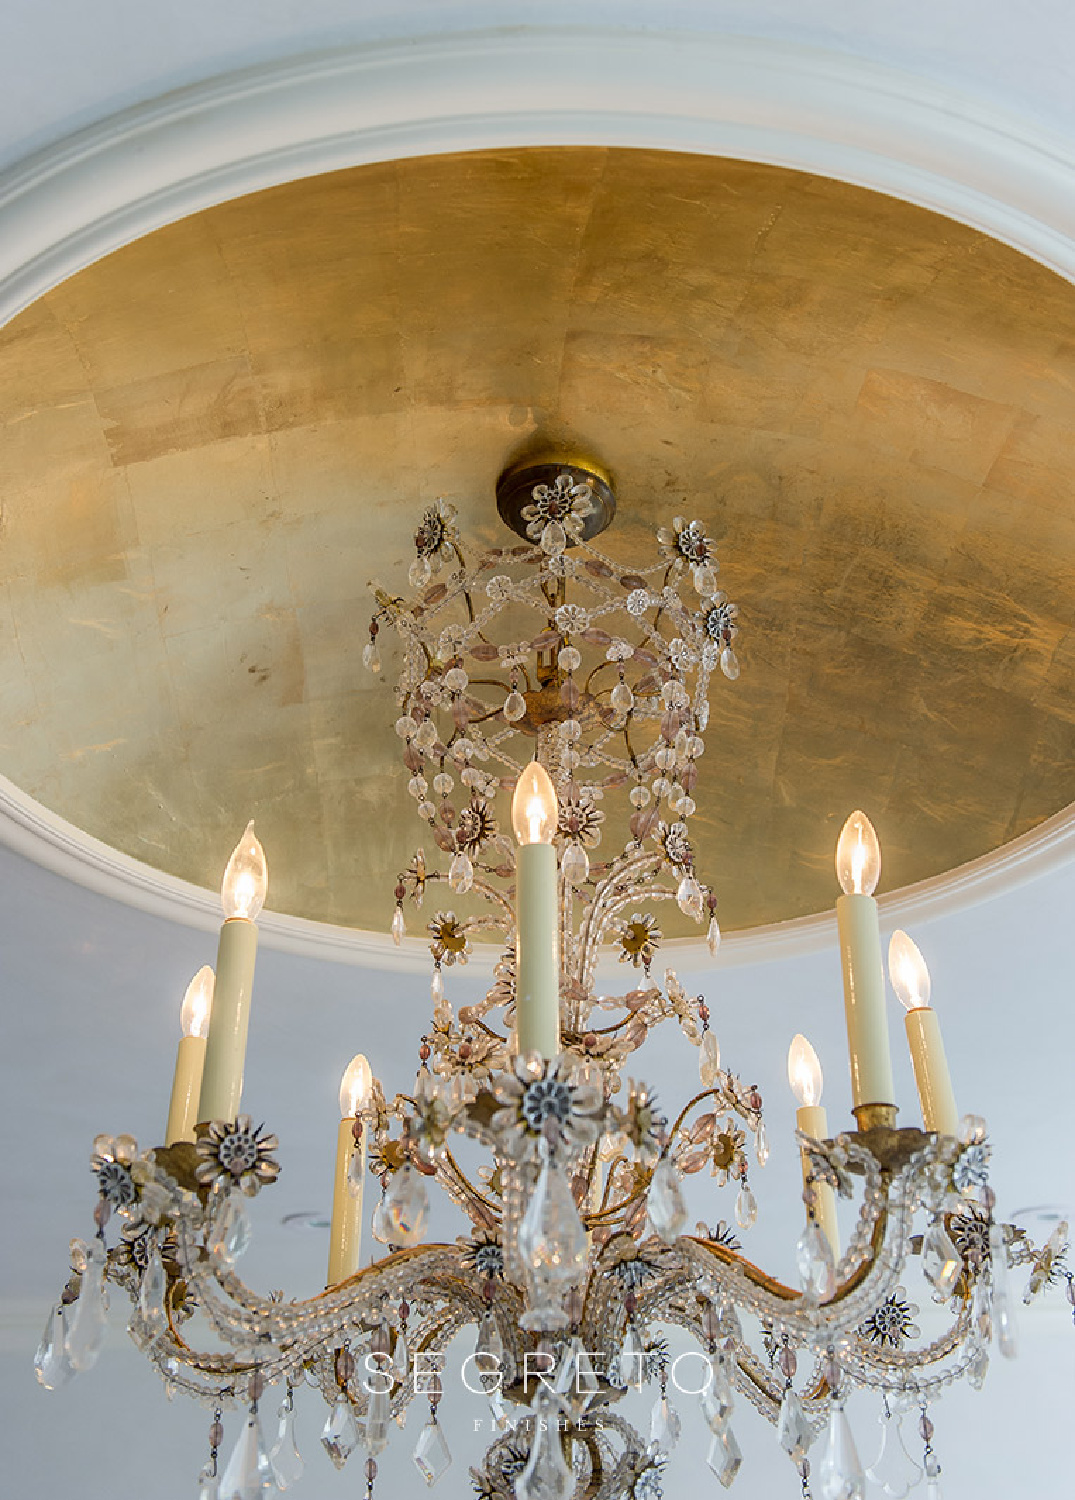 Gold leaf embellished ceiling medallion and beautiful chandelier - Segreto Finishes.